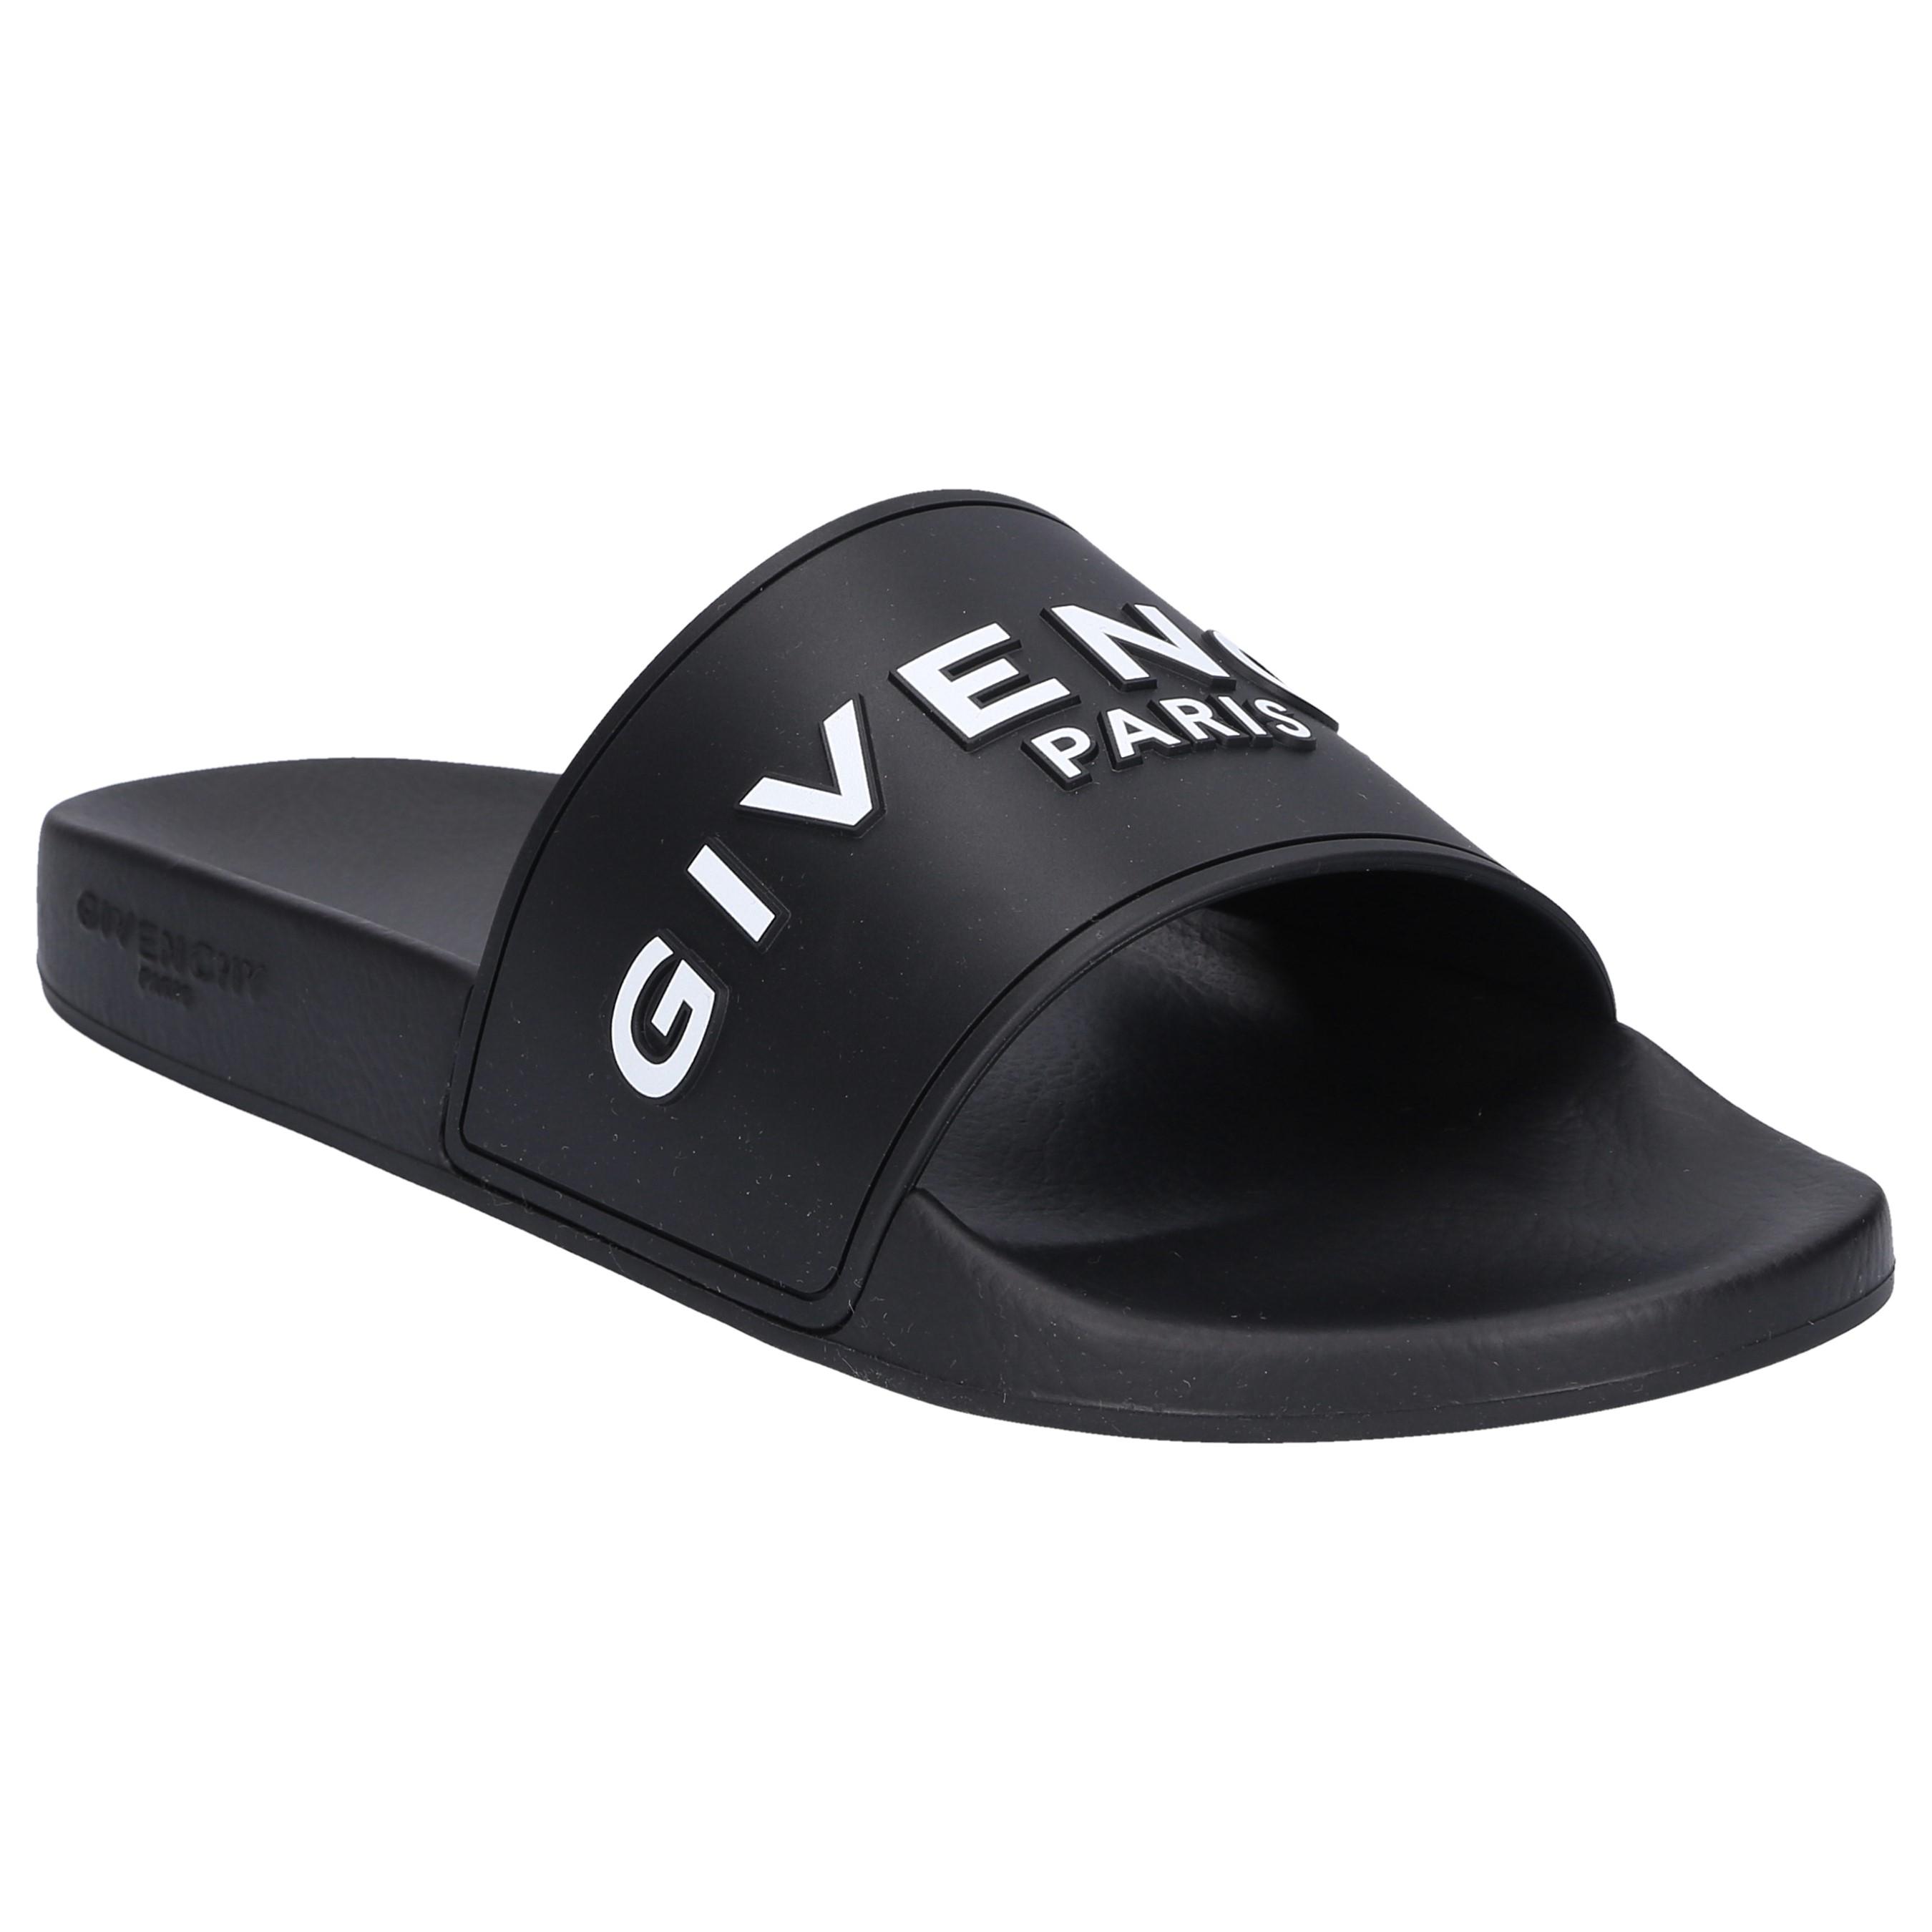 Givenchy Beach Sandals Slide in Black for Men - Lyst